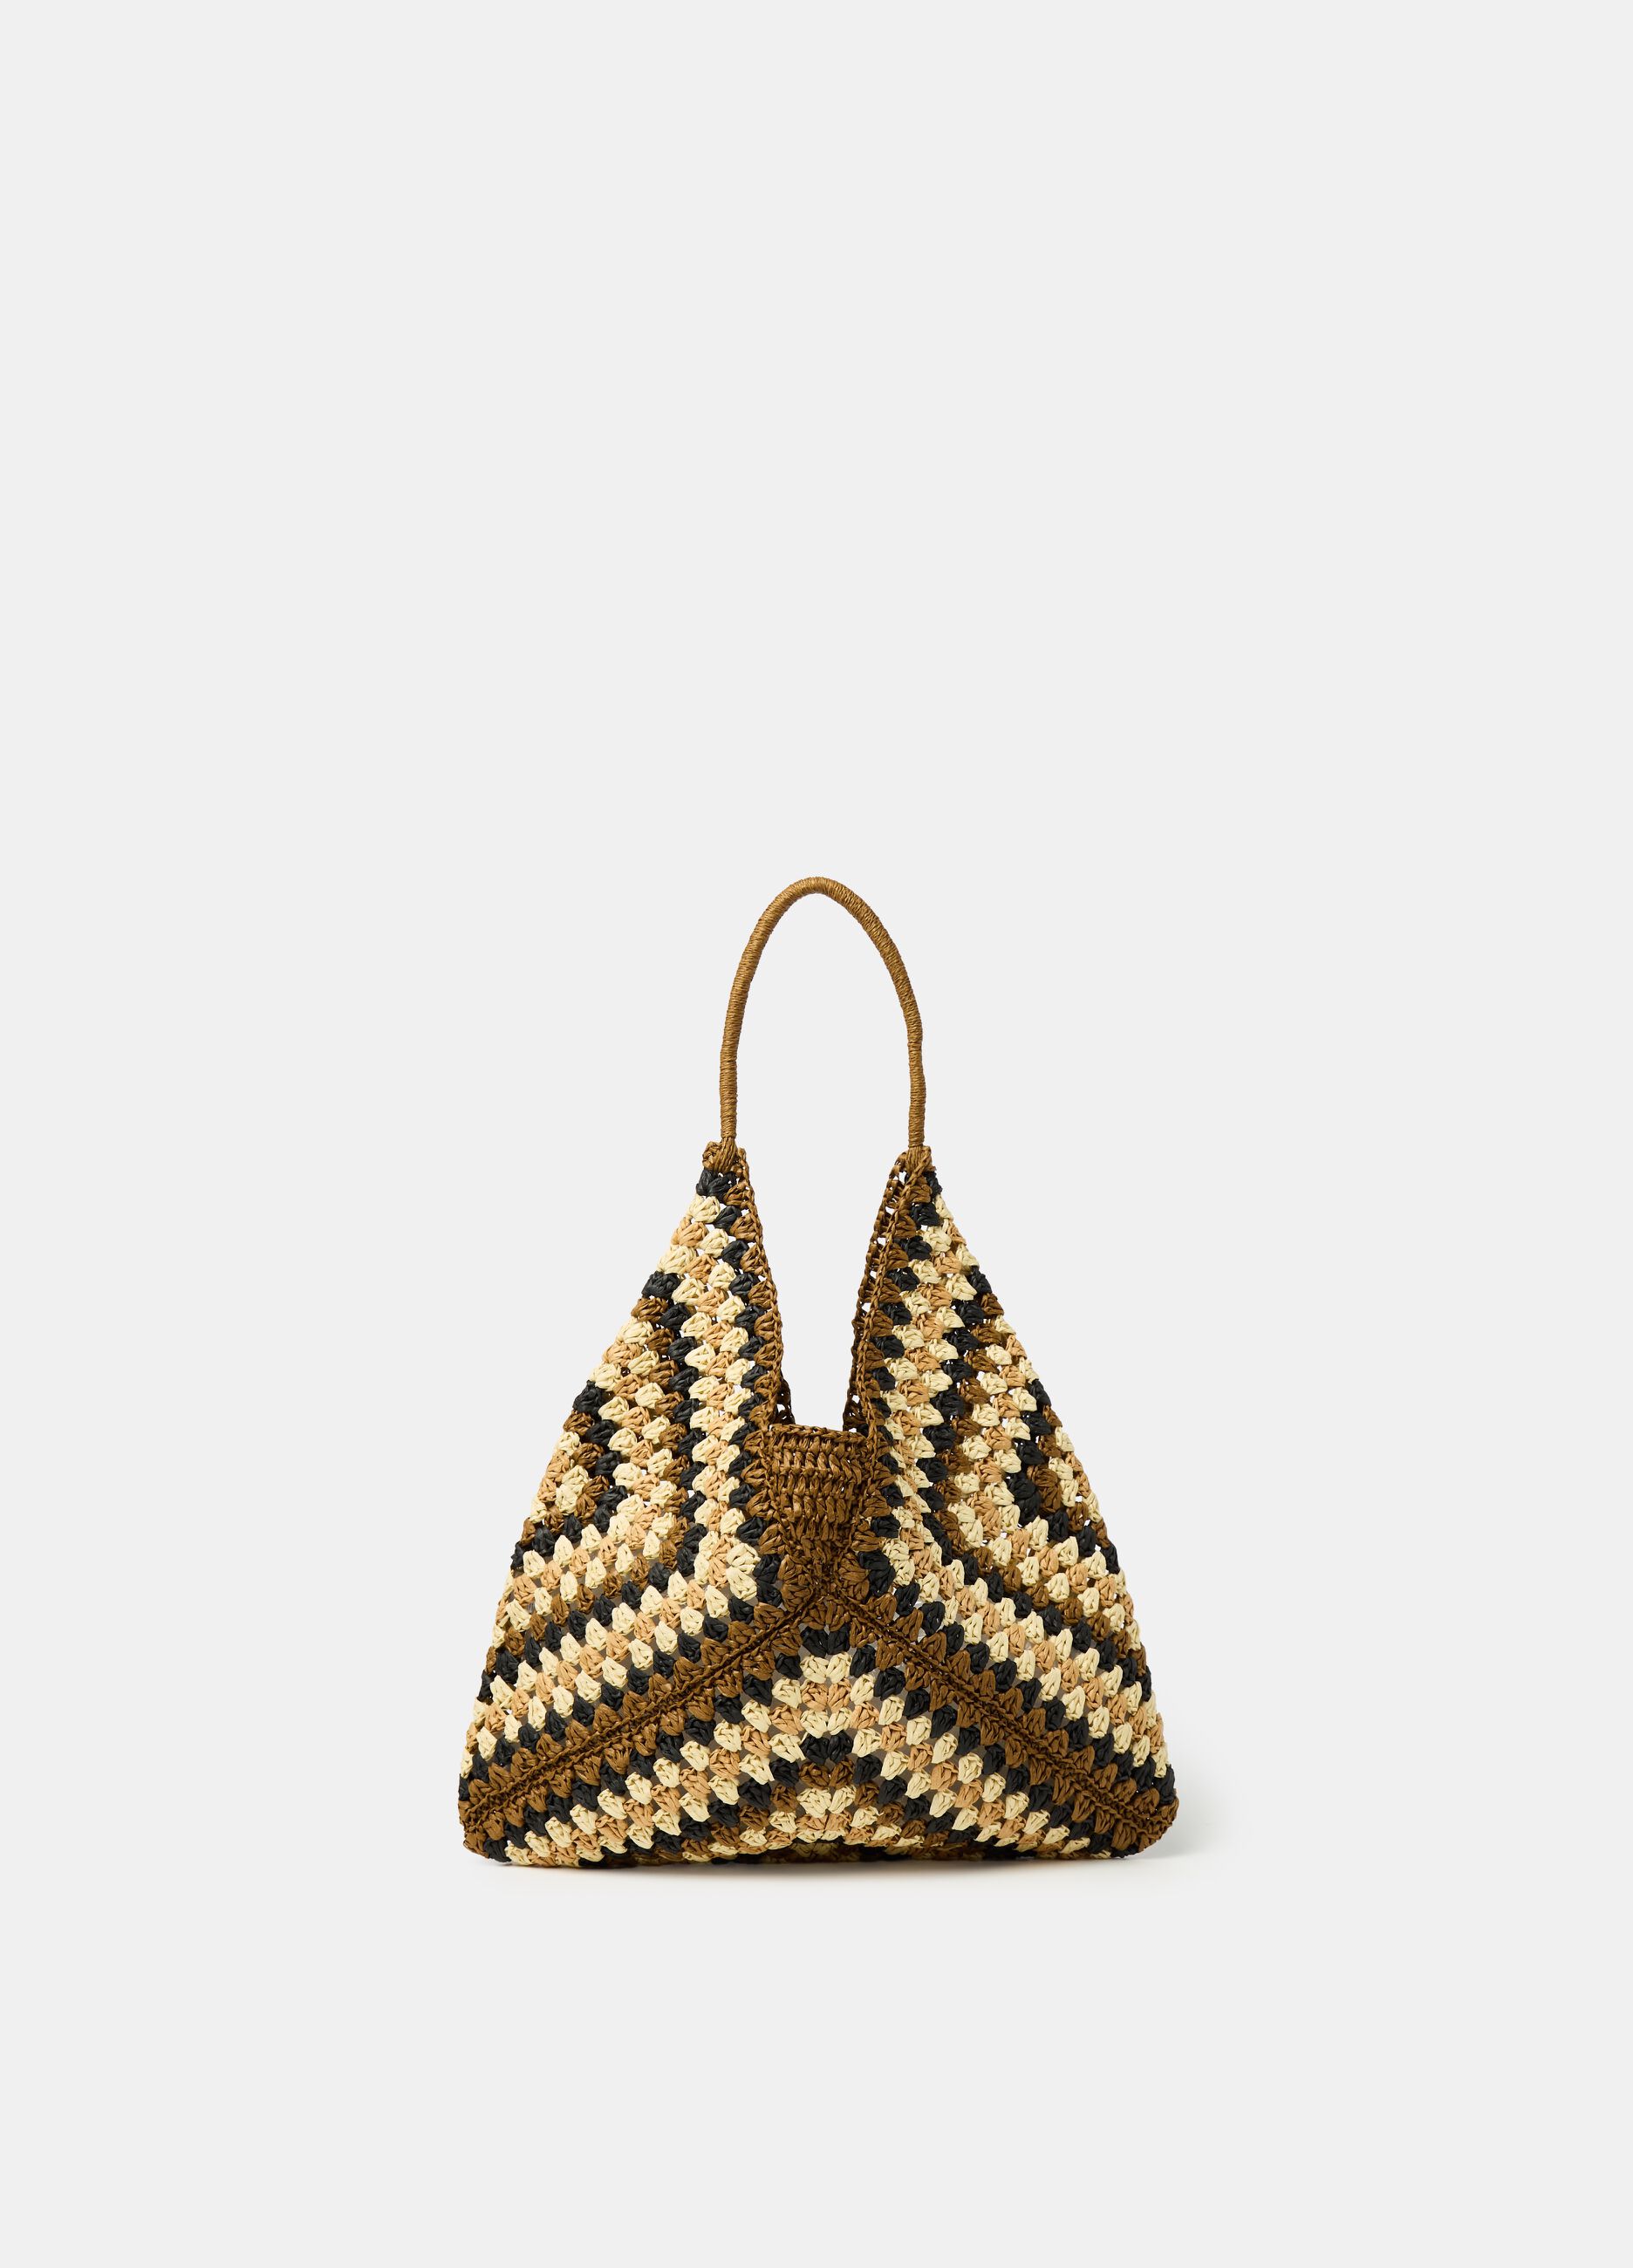 Raffia bag with geometric design